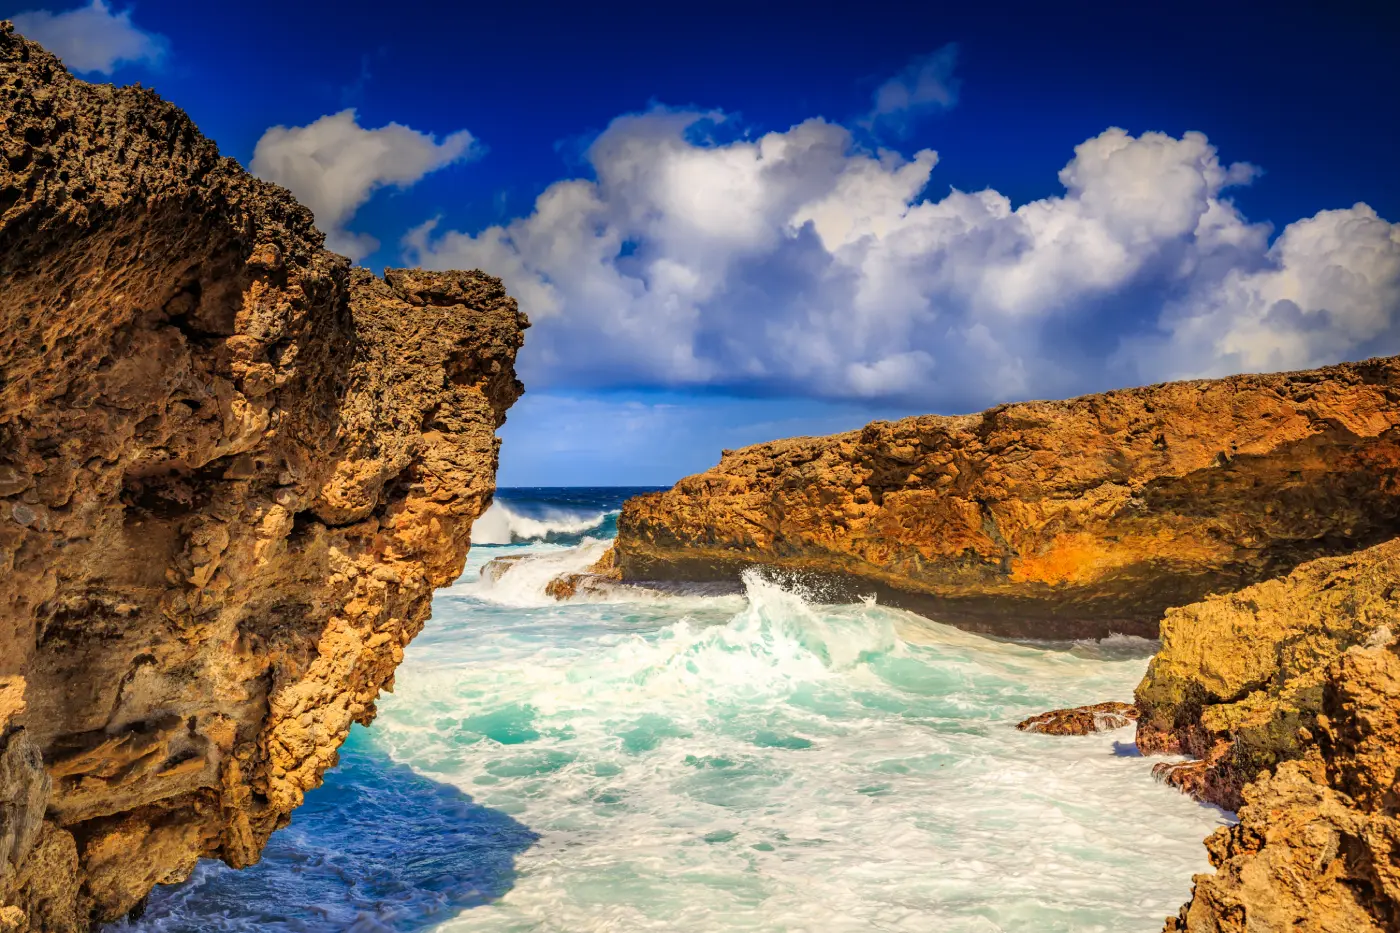 Wat is het mooiste deel van Curaçao? Shete Boka National Park